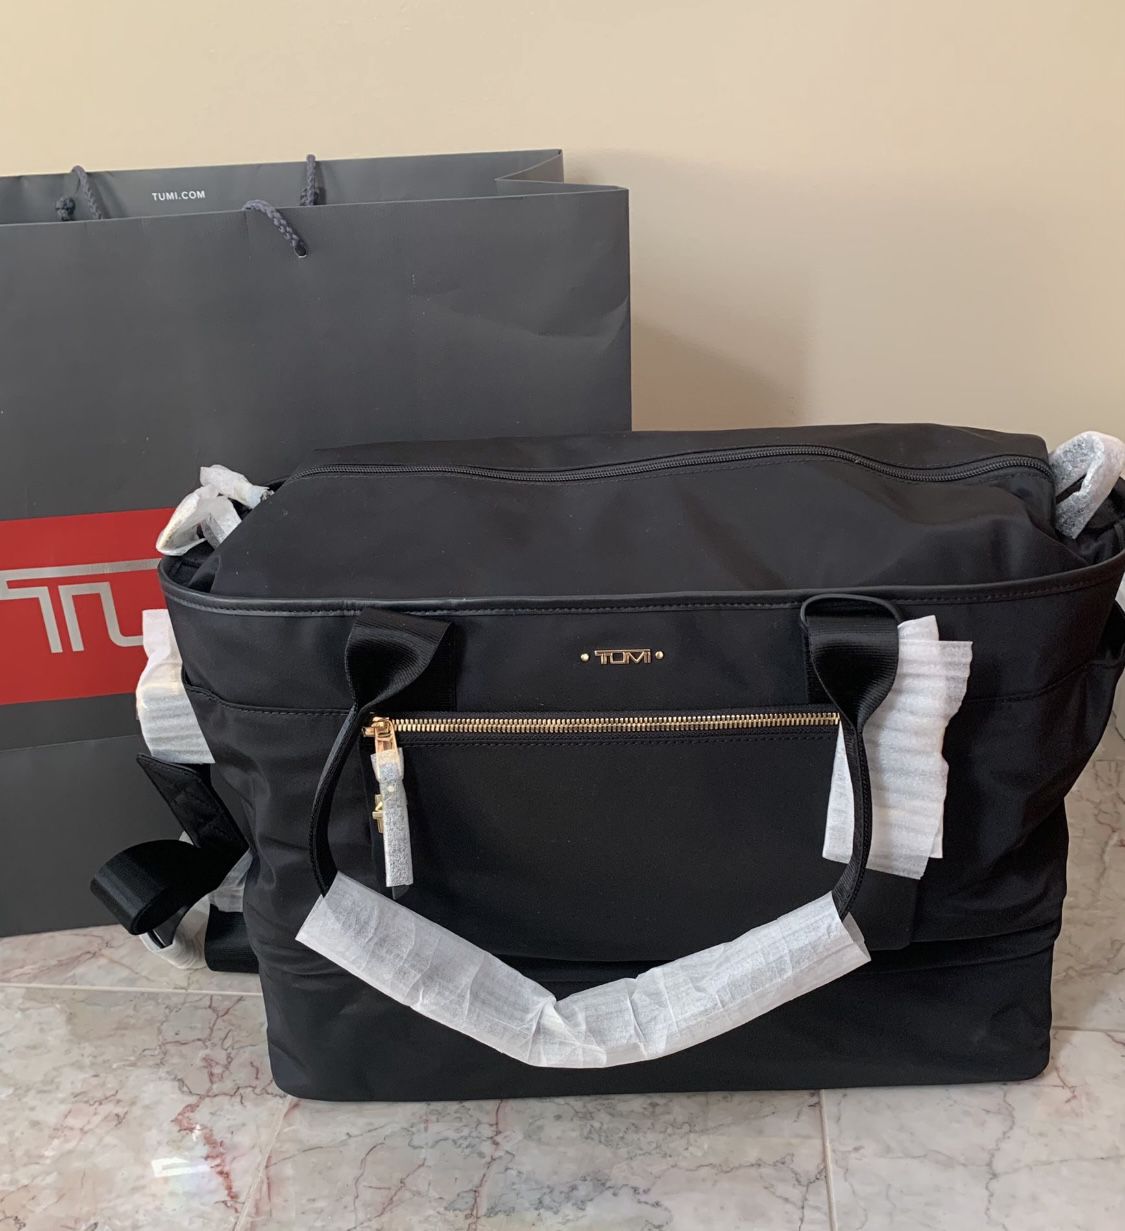 NEW -TUMI Weekender Duffle Bag for Sale in Monroe, WA - OfferUp